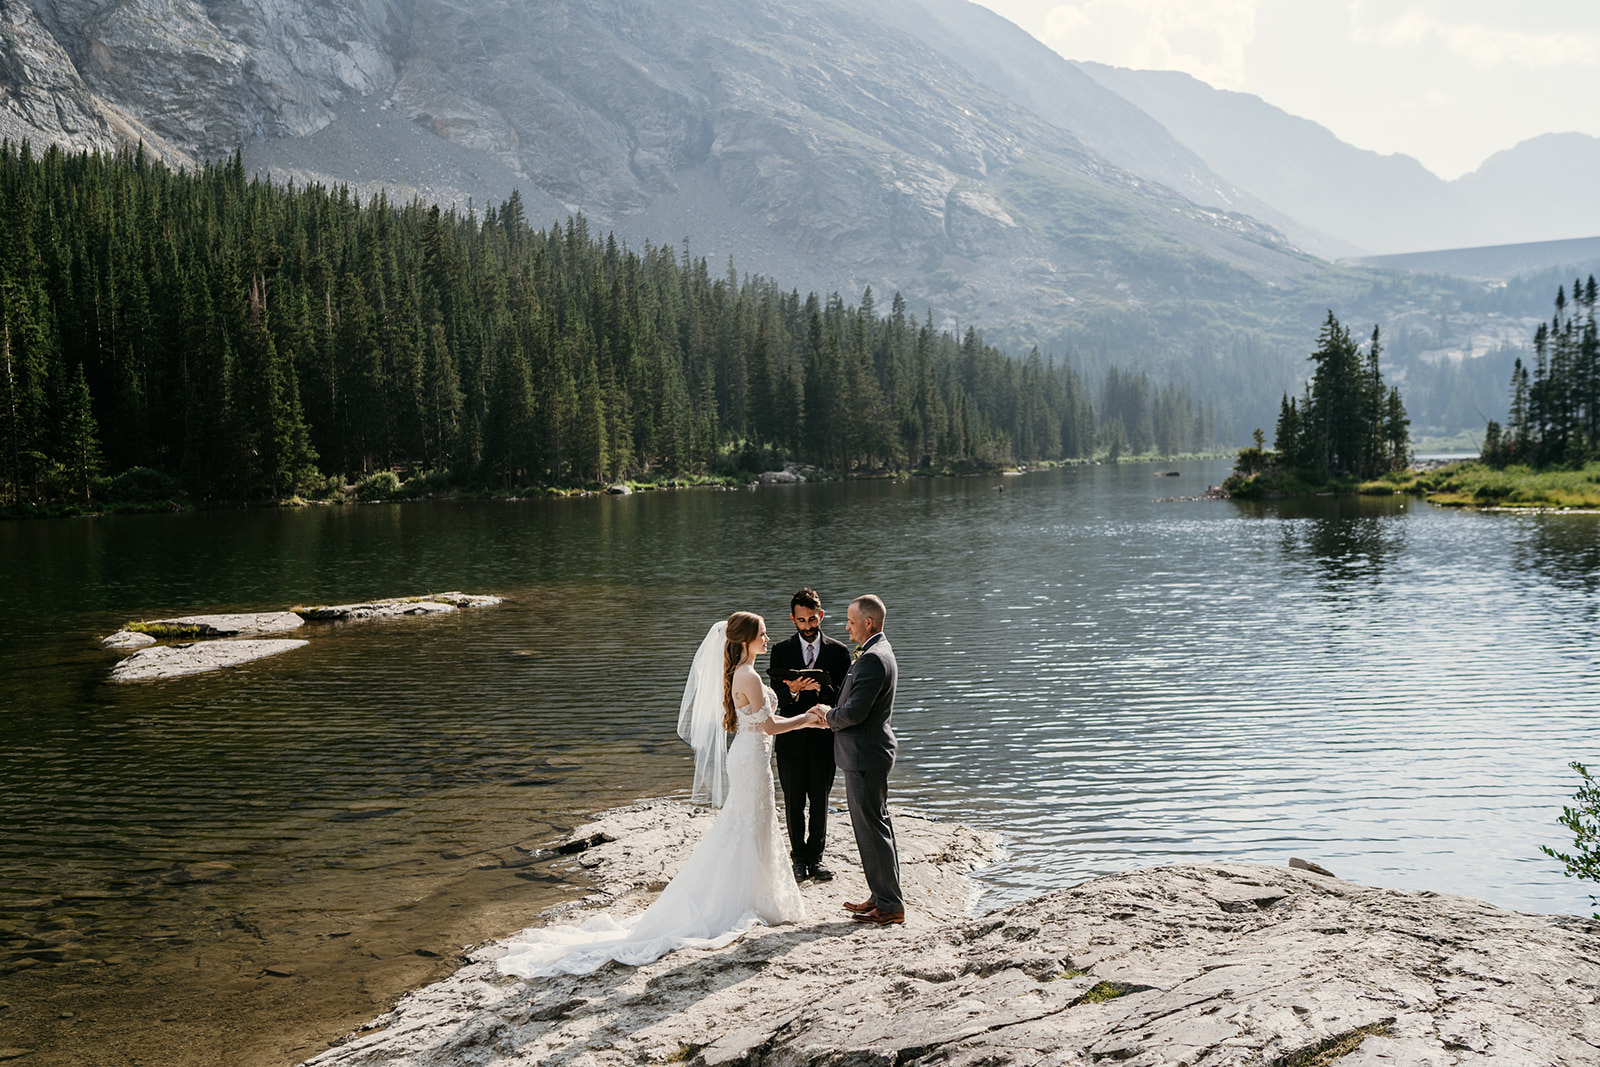 Romantic summertime private adventure elopement at Blue Lakes in Breckenridge, Colorado